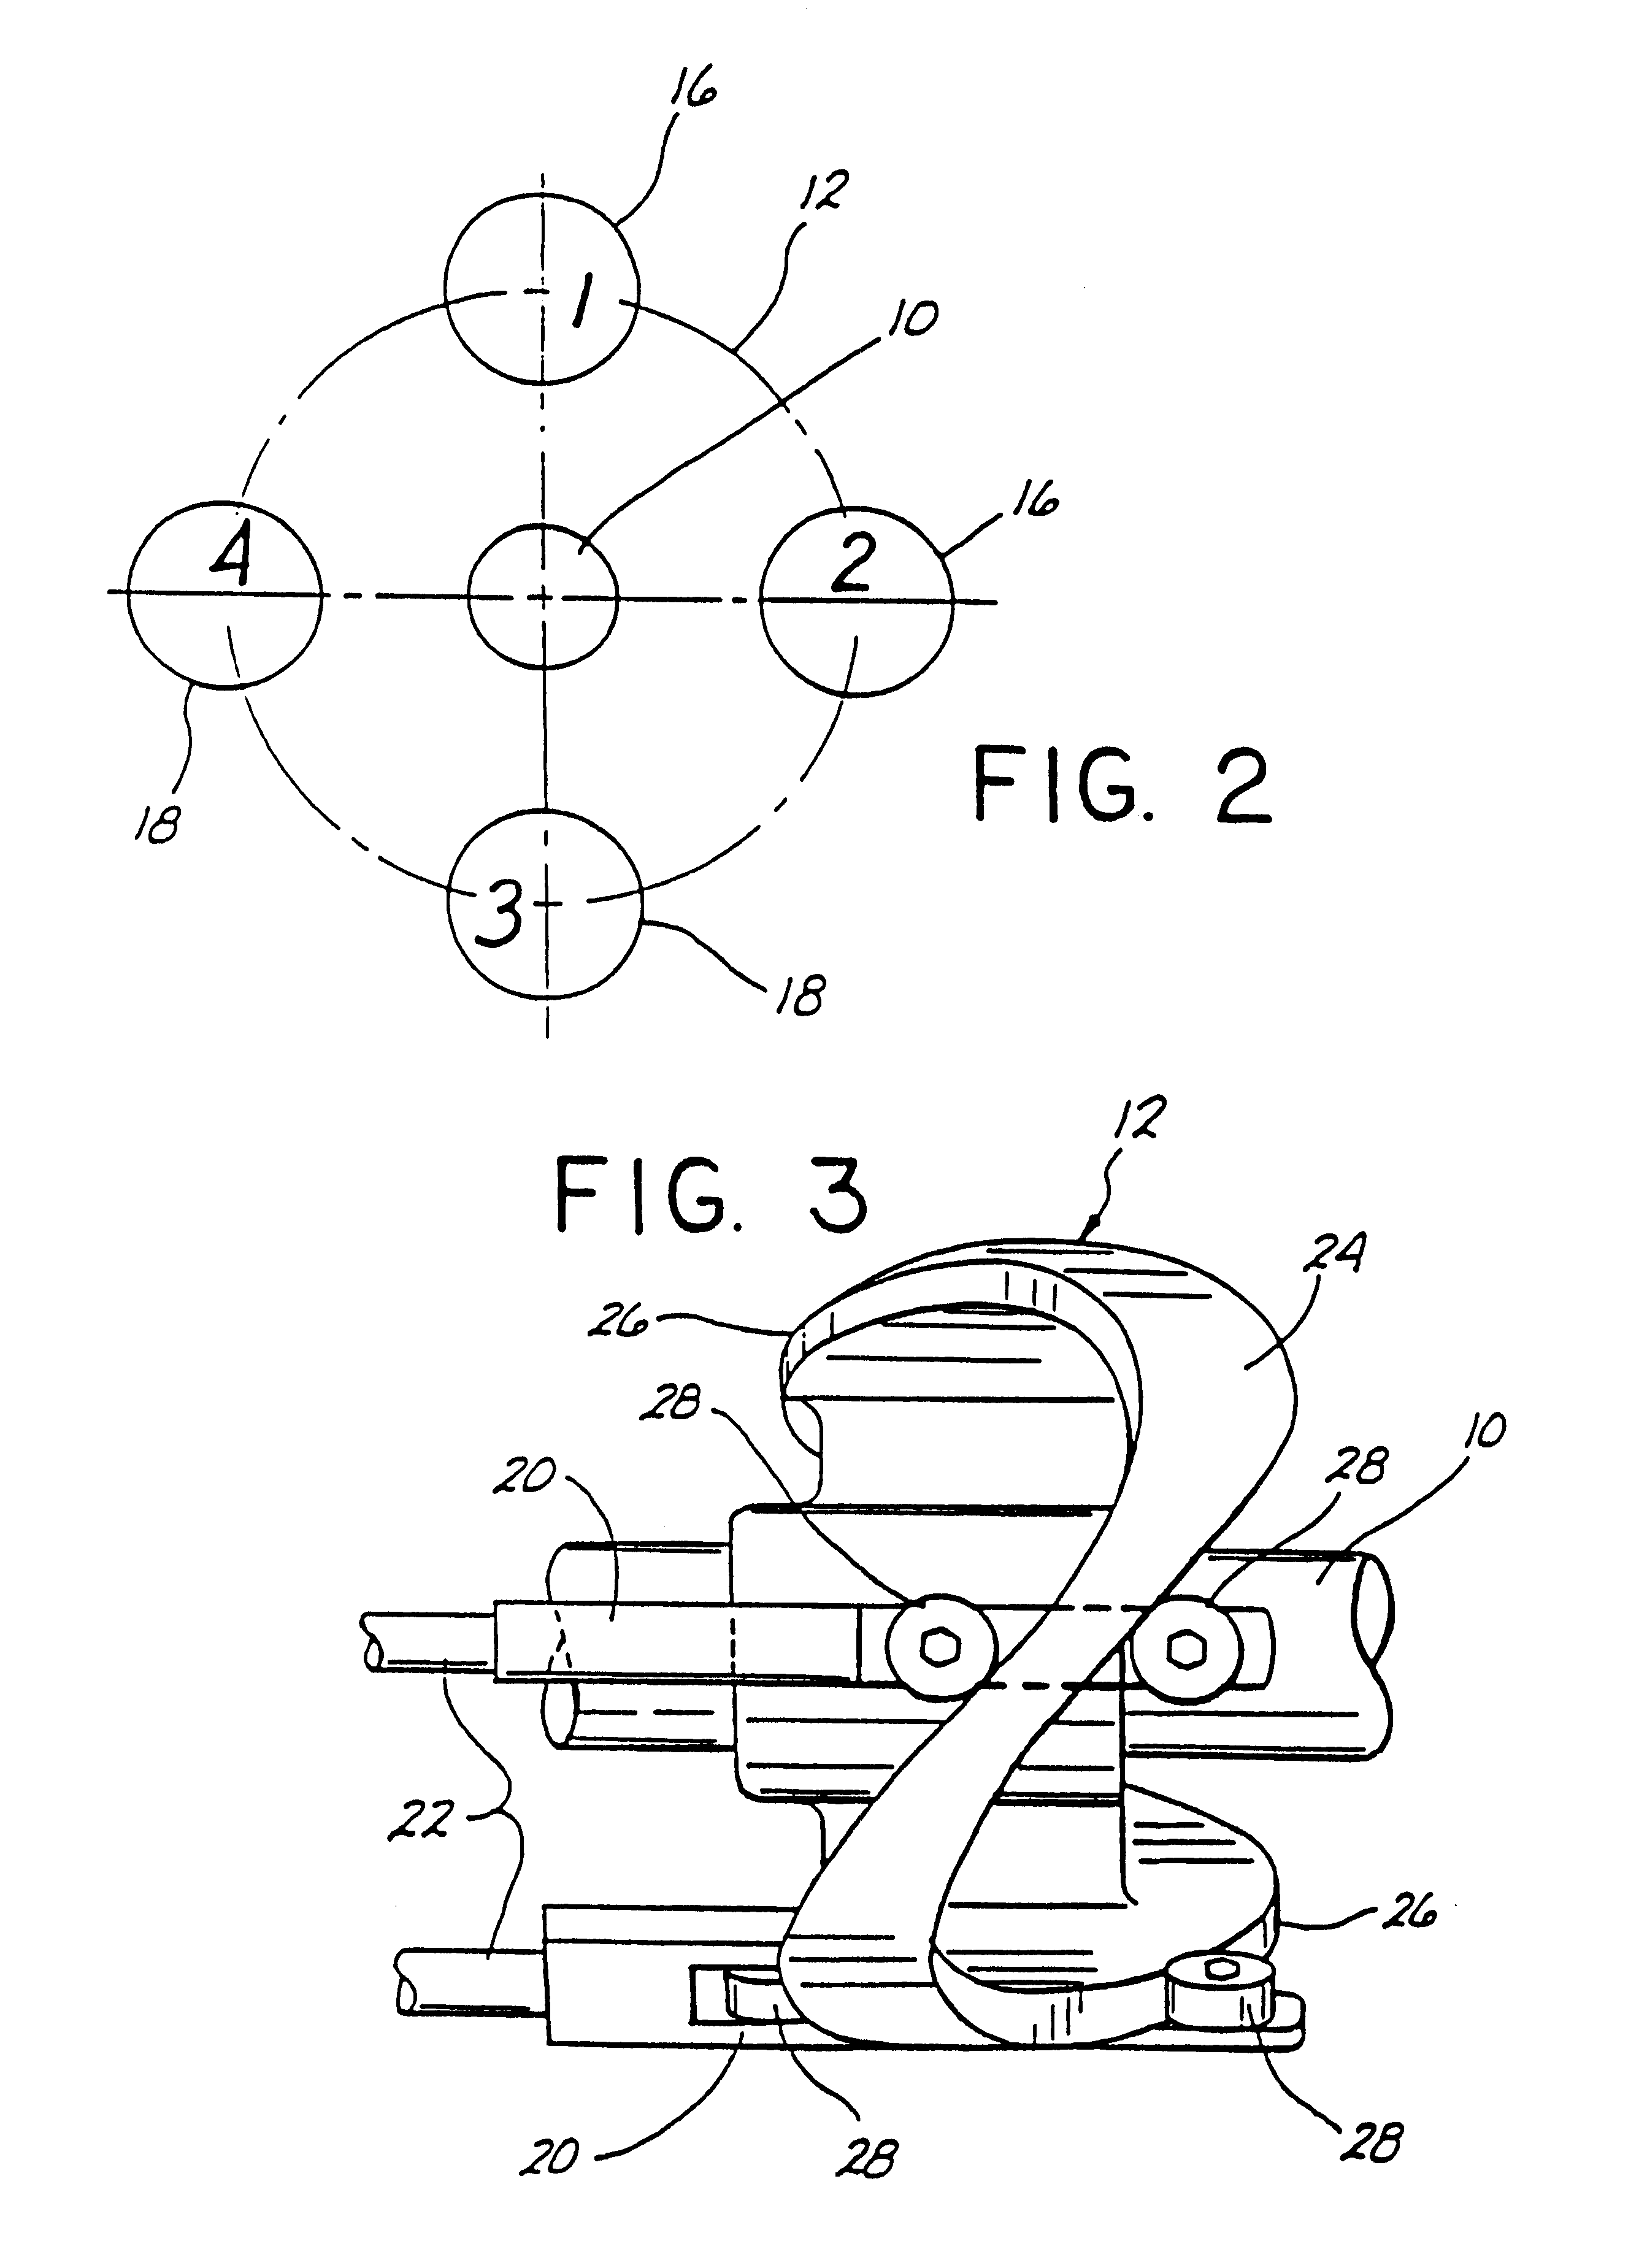 Adiabatic, two-stroke cycle engine having novel scavenge compressor arrangement